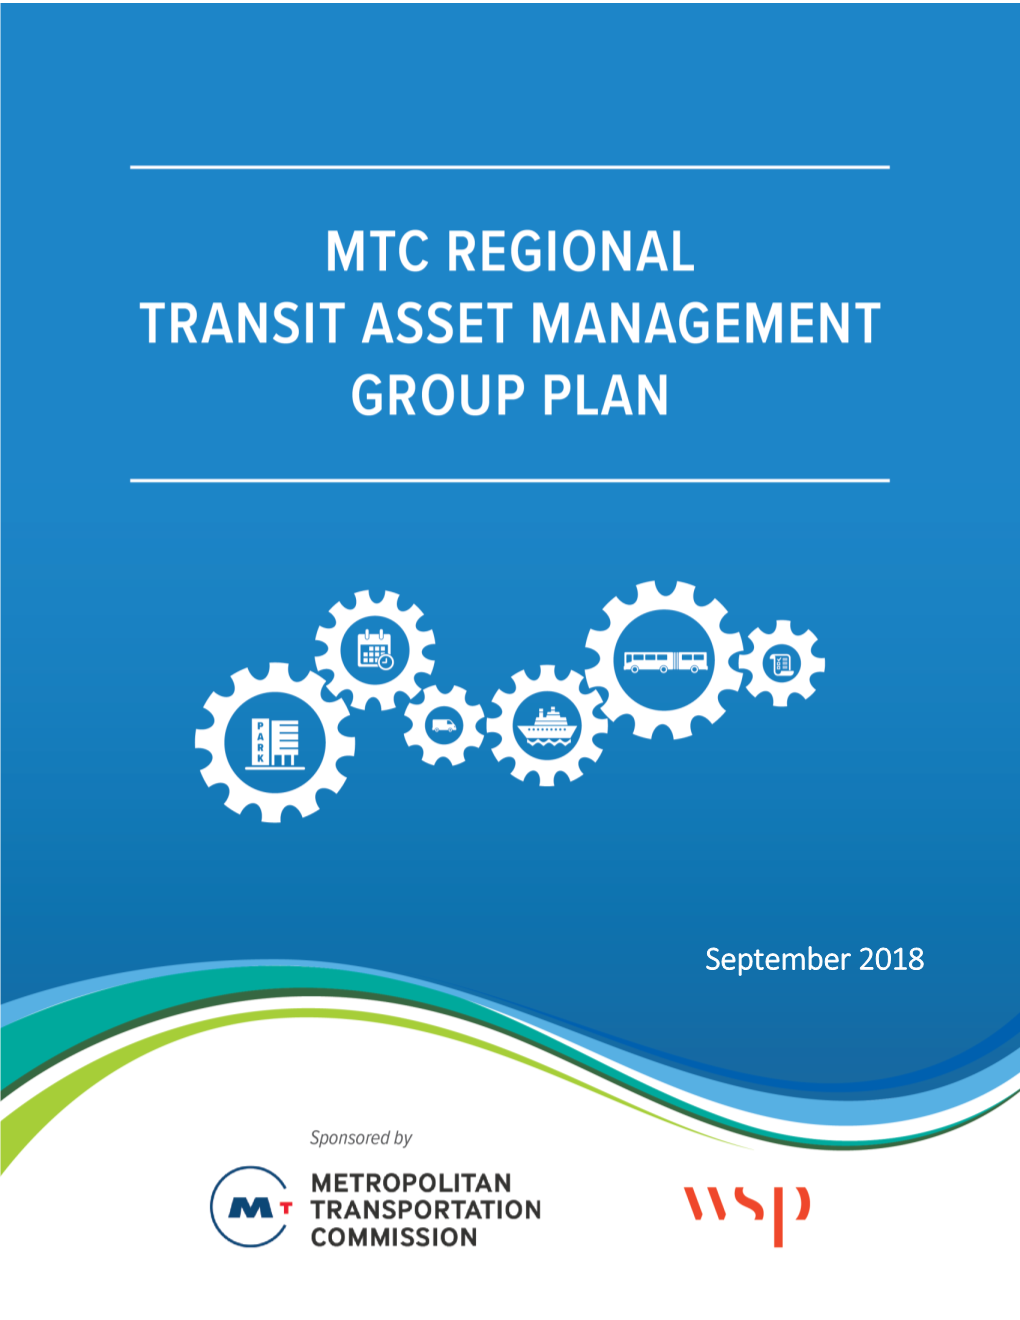 Metropolitan Transportation Commission Regional Transit Asset